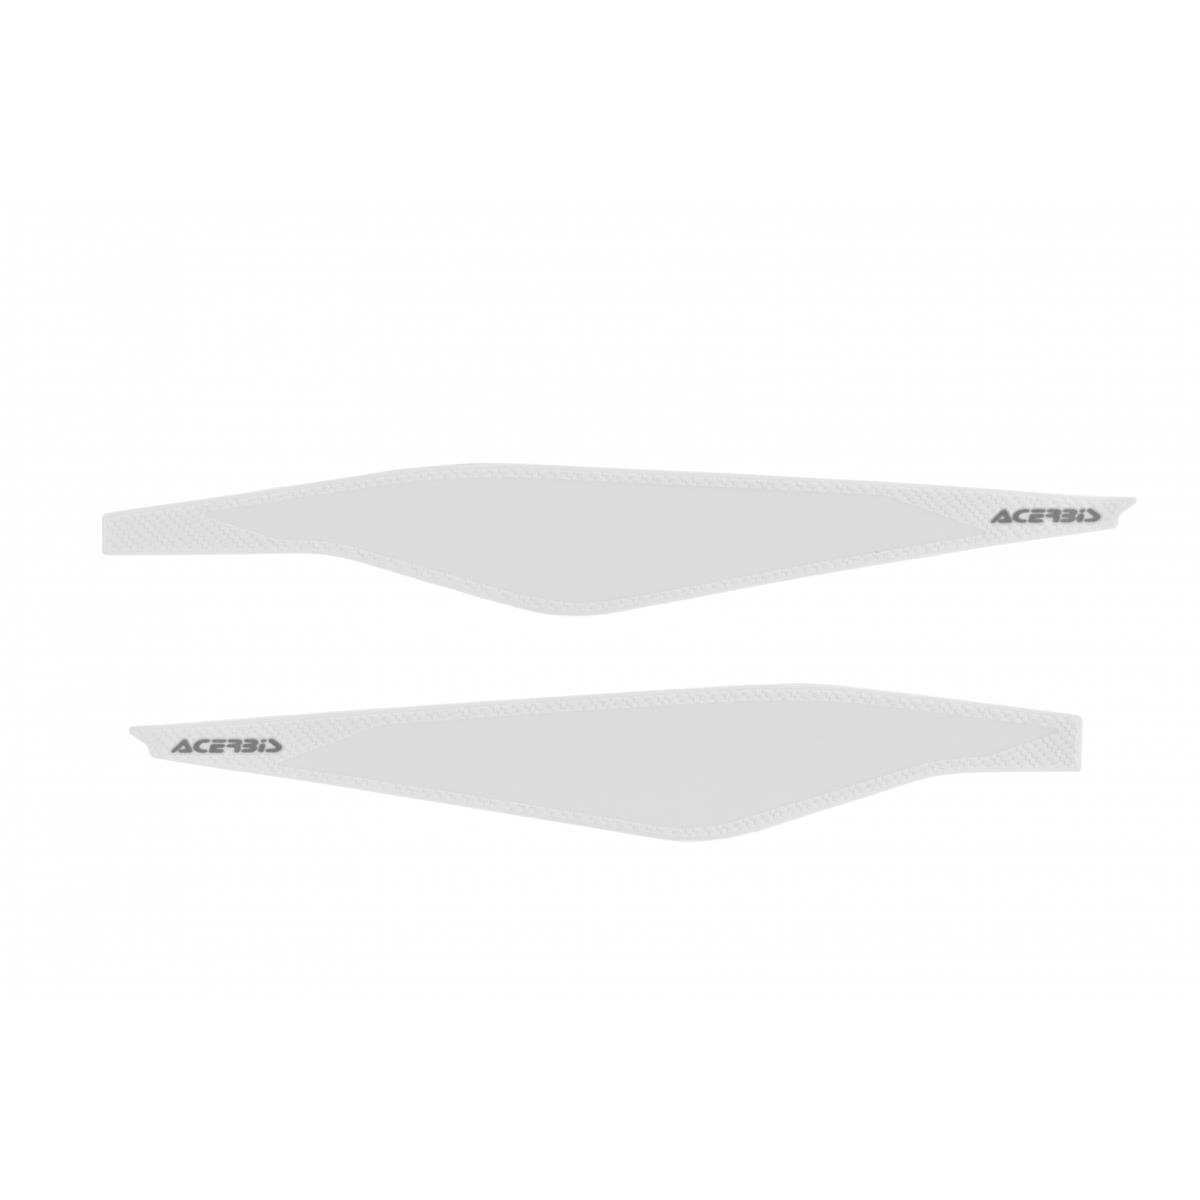 Acerbis Swingarm Cover X-Guard KTM SX/SX-F, White